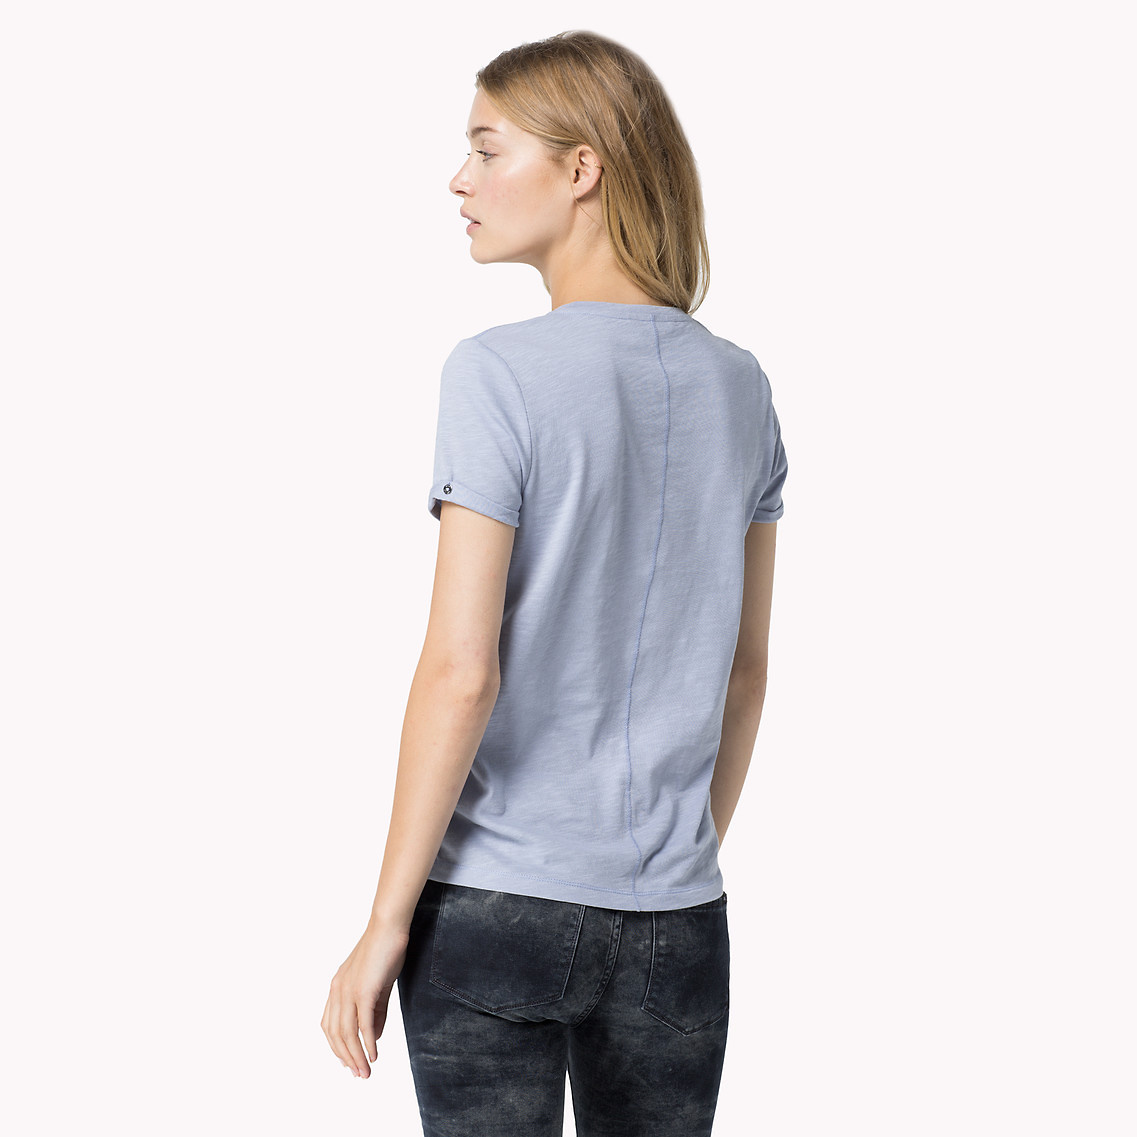 Tommy Hilfiger női fehér pamut T-shirt 2015.03.01 #80622 fotója